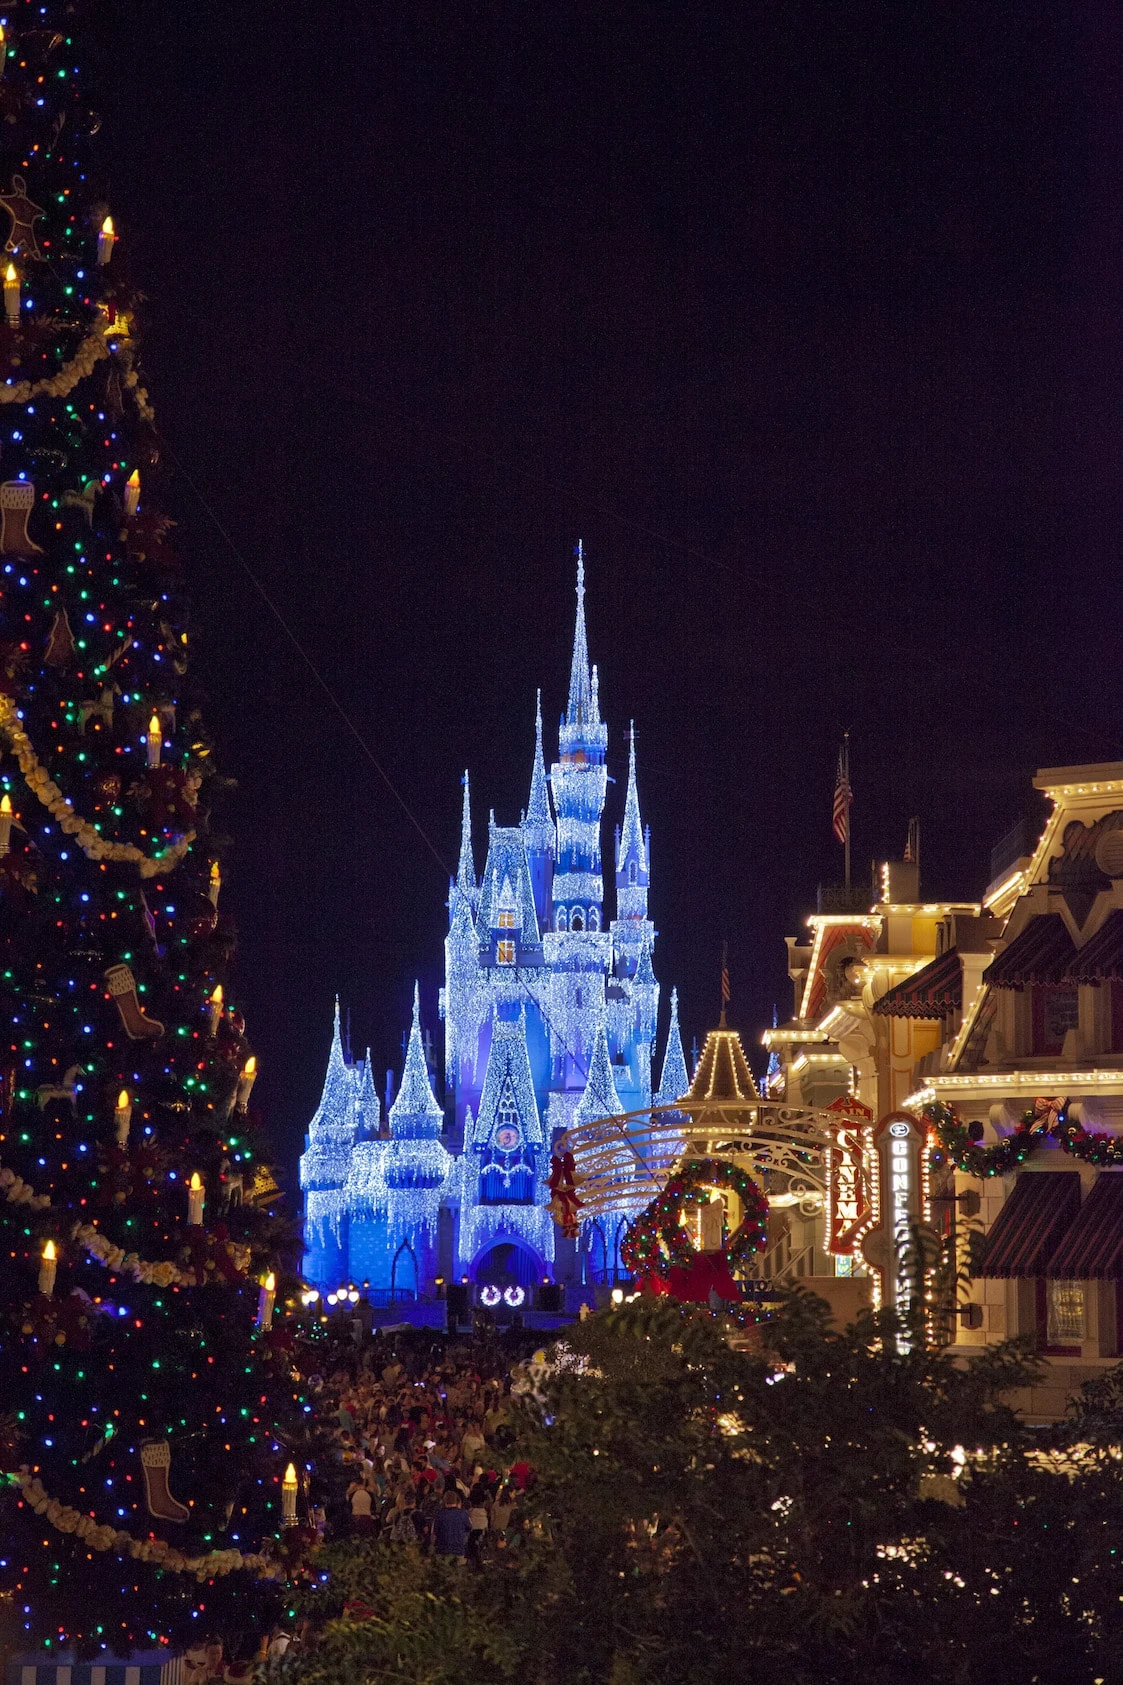 Cinderella Castle with Main Street USA and Christmas Tree Magic Kingdom at Night